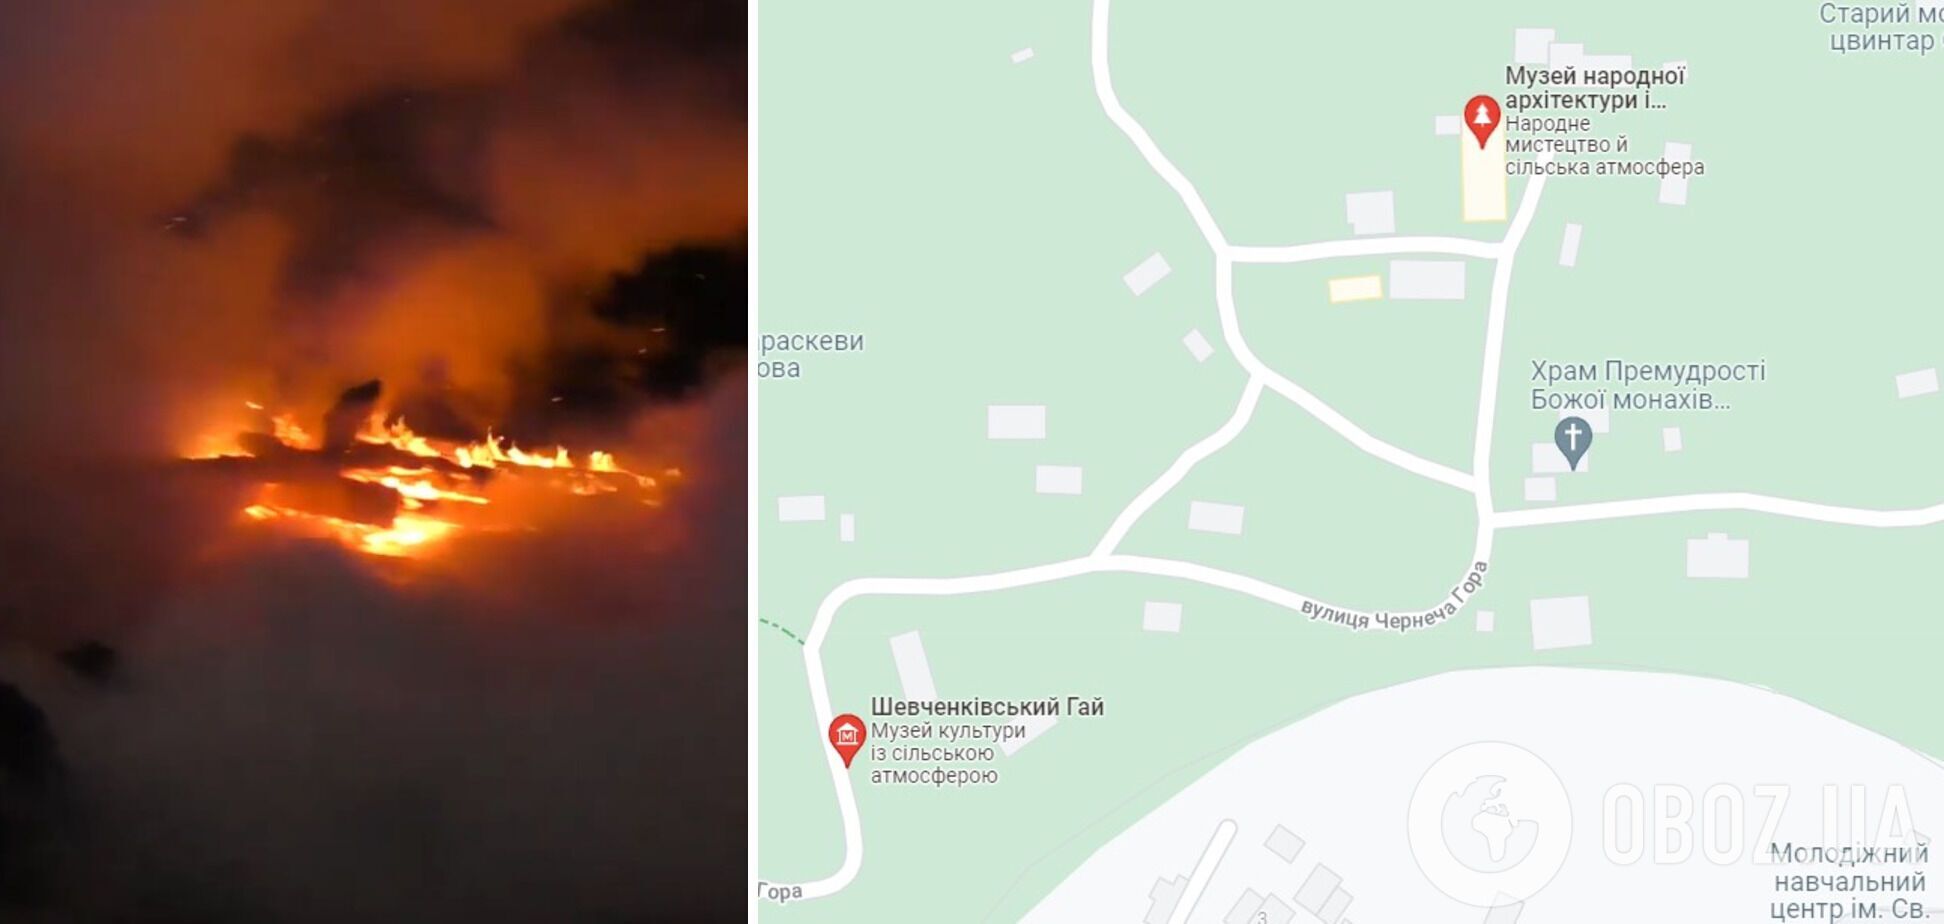 Пожежа трапилася у "Шевченківському гаю" на вулиці Чернеча Гора